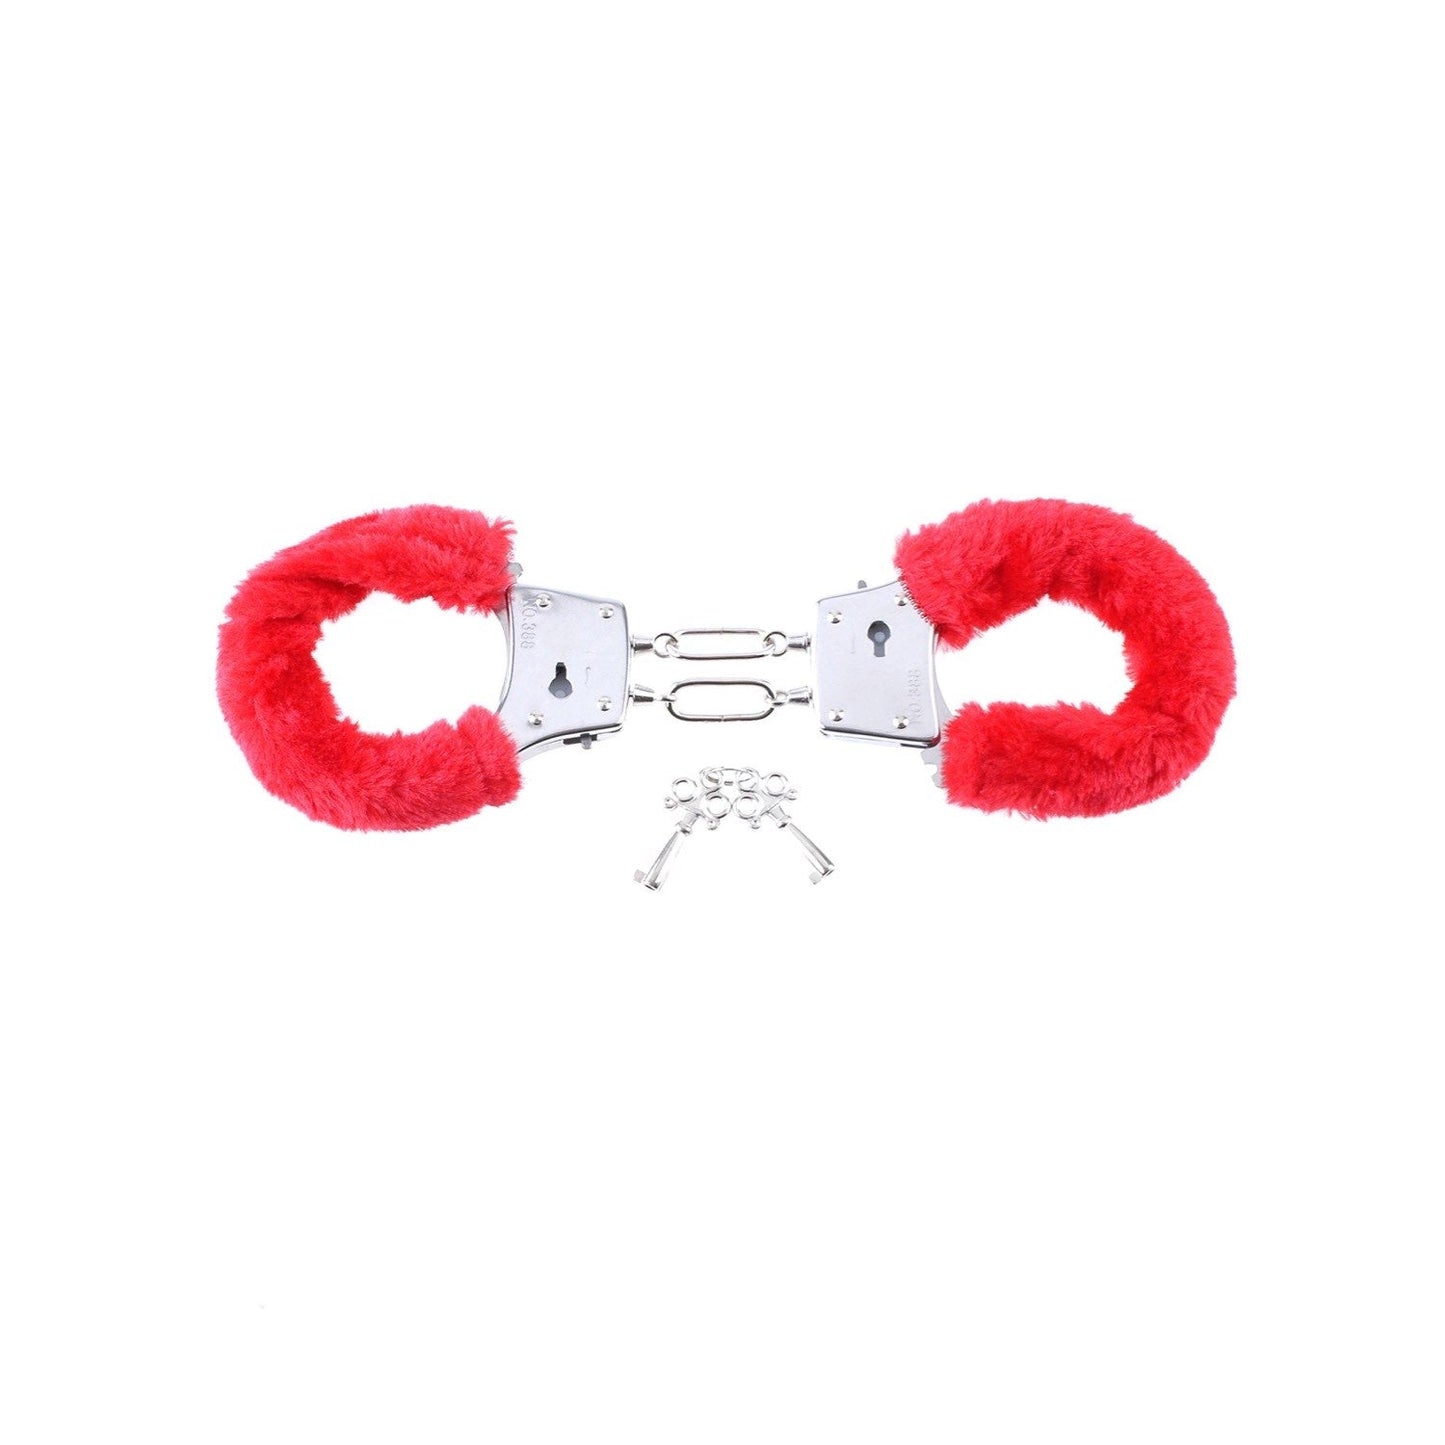 Beginner's Furry Cuffs - Red Fluffy Cuffs